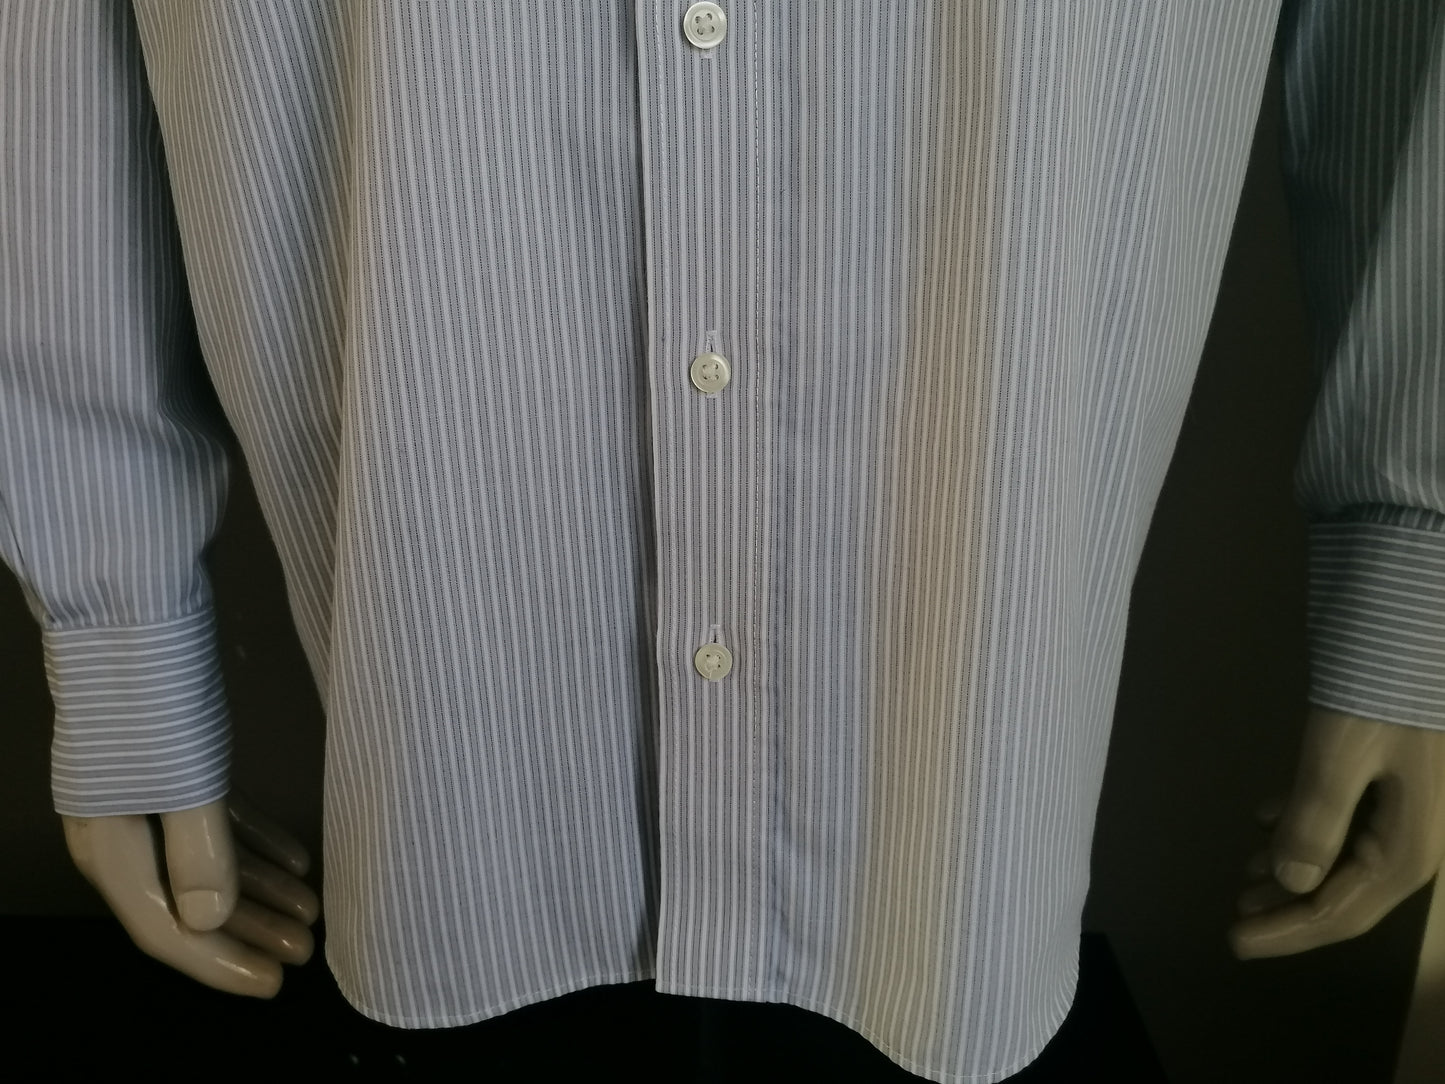 M&S Man (Marks & Spencer) shirt. Gray white striped. Size 43 / XL. Regular fit.